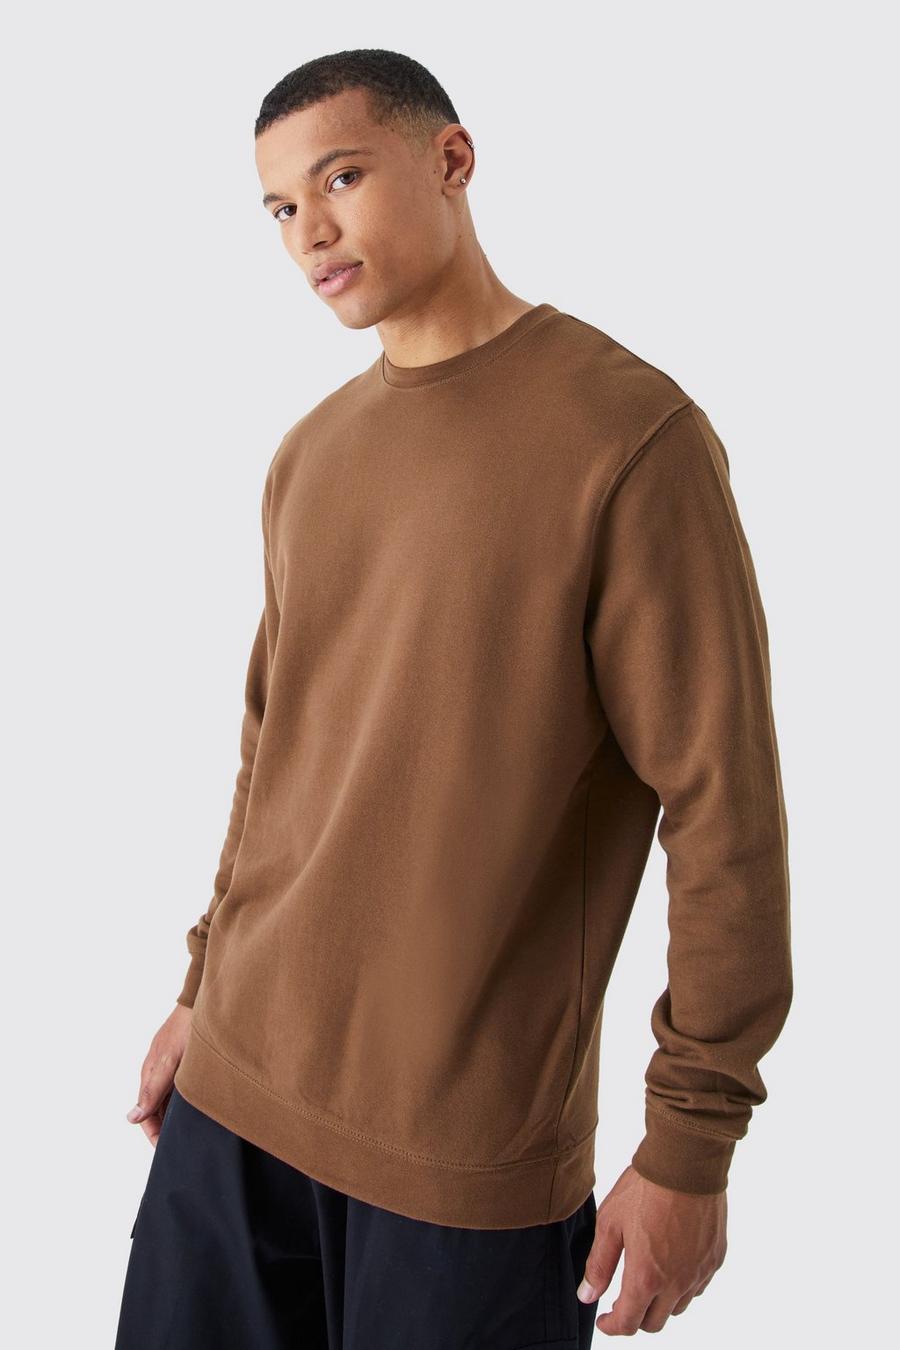 Chocolate brown Tall Core Fit Basic Sweatshirt